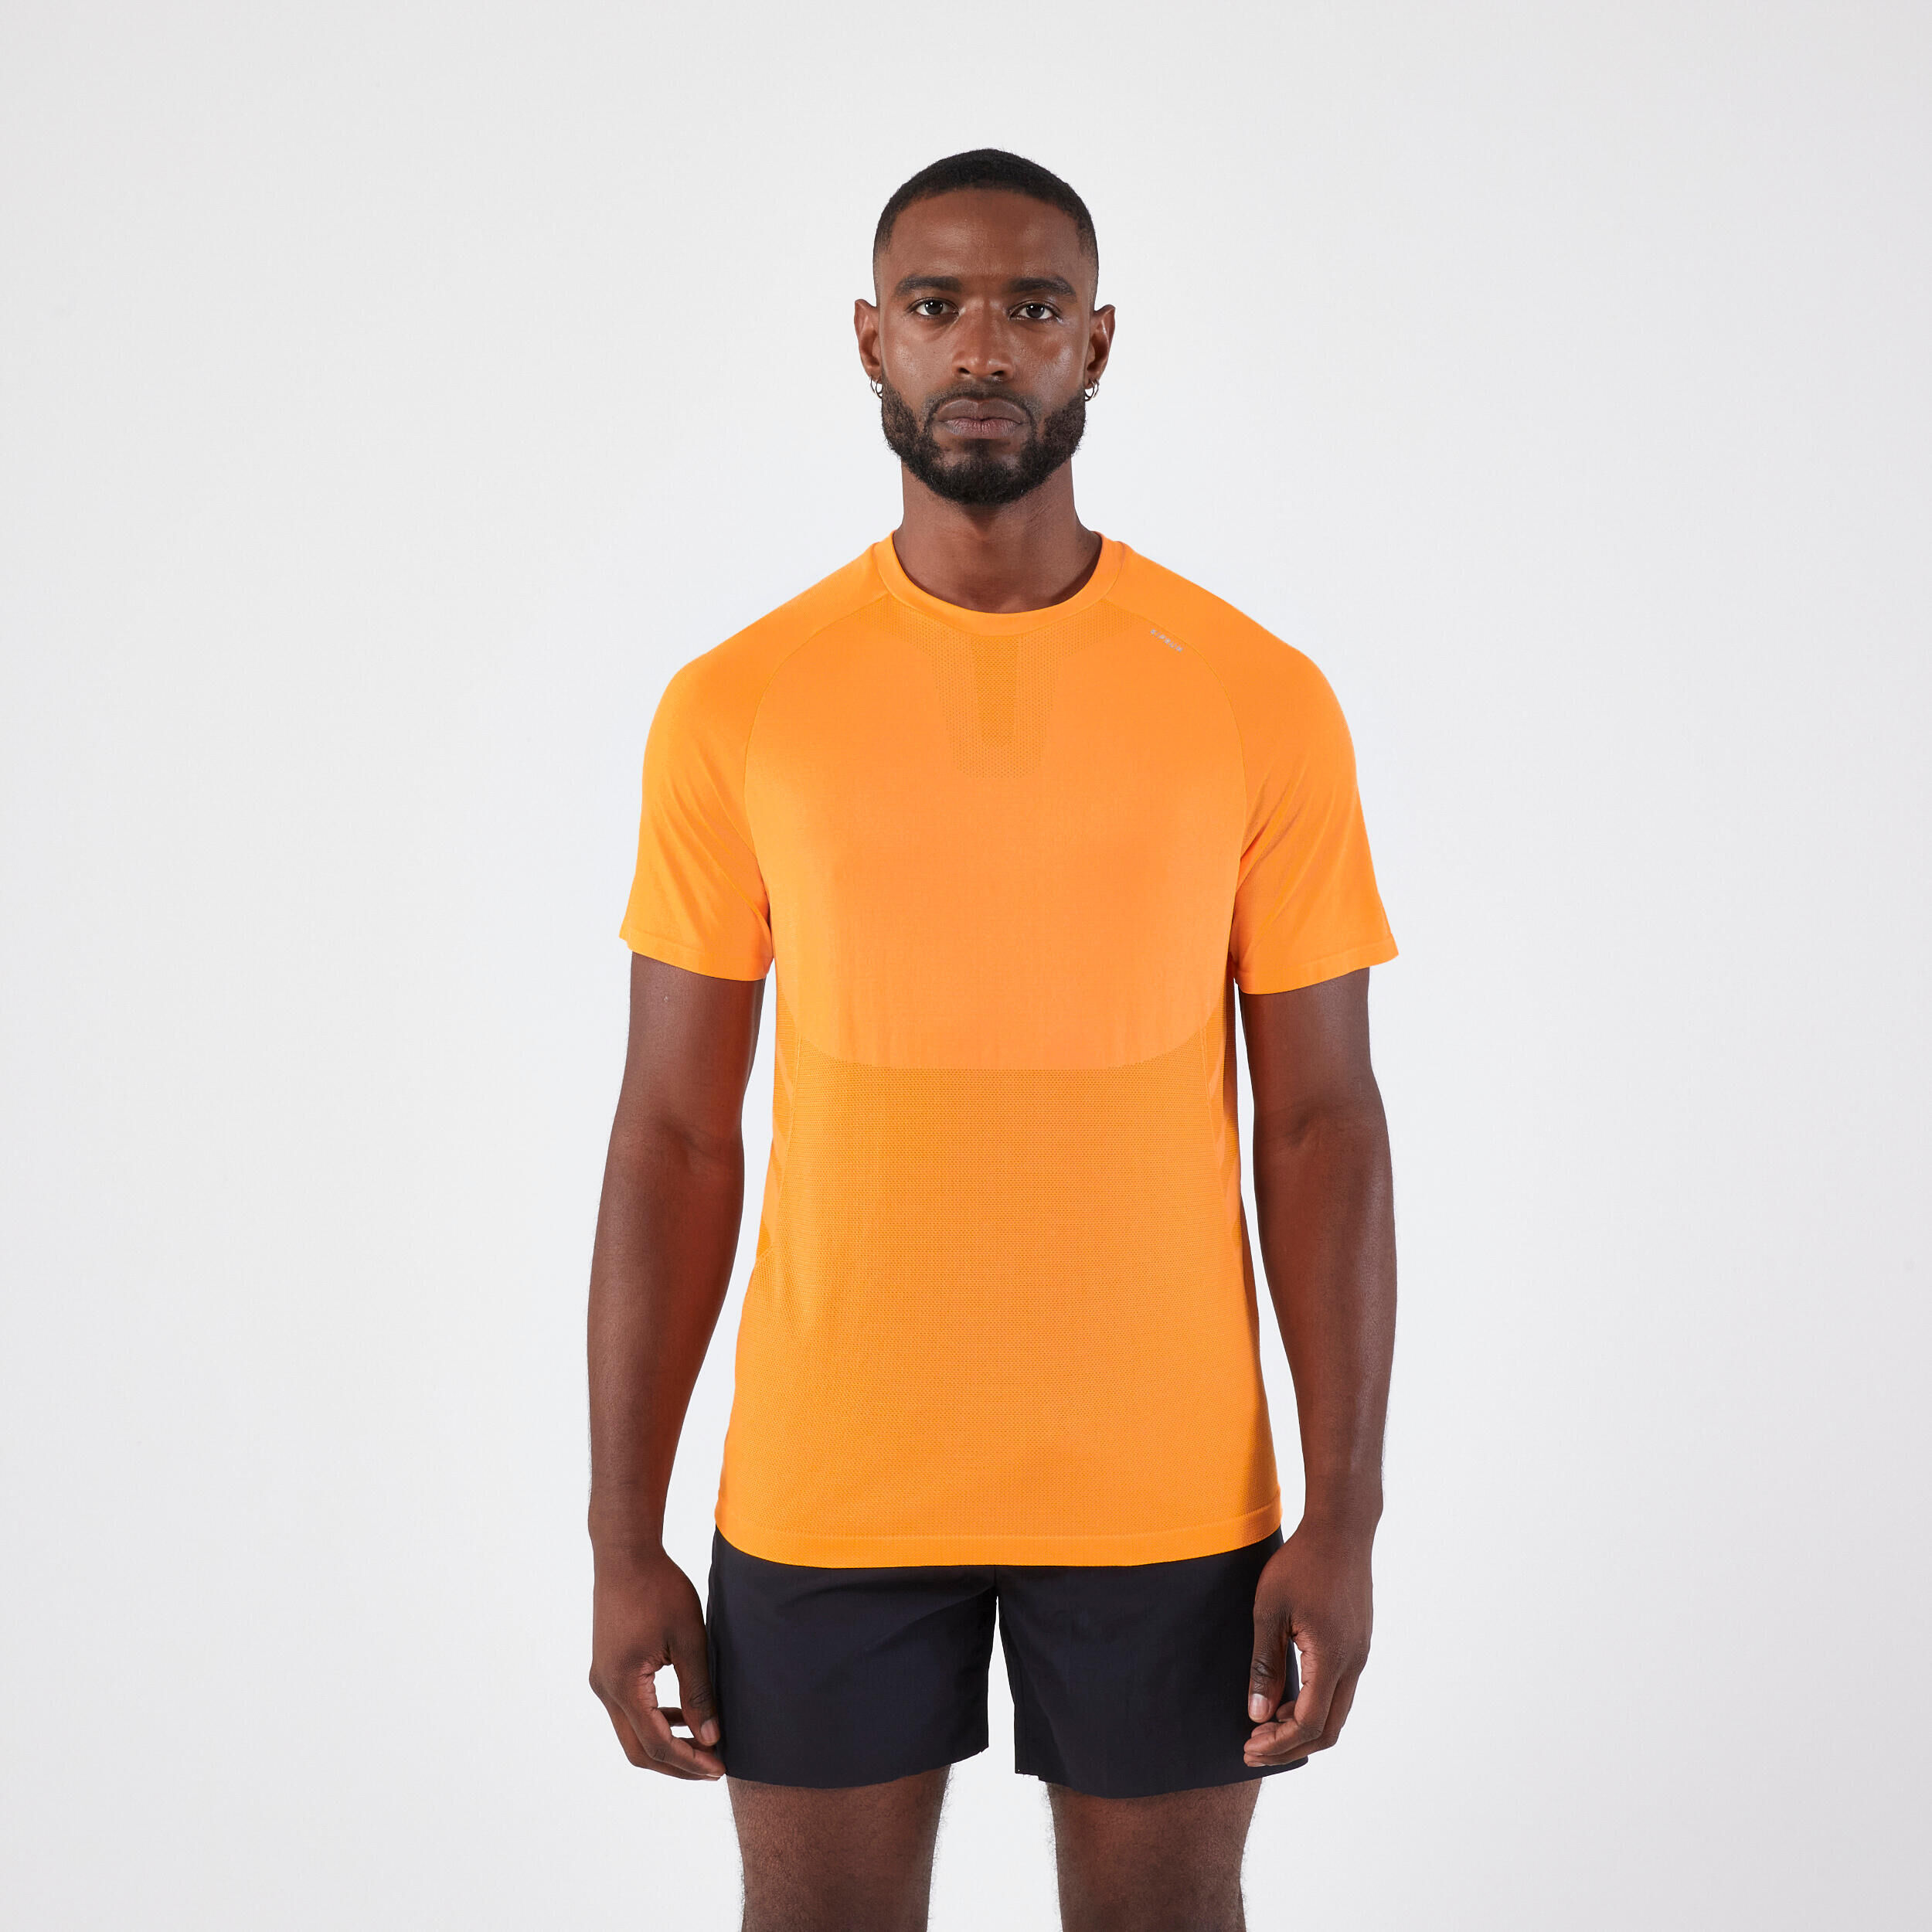 Running Tops, Vests & T Shirts - Adidas & More